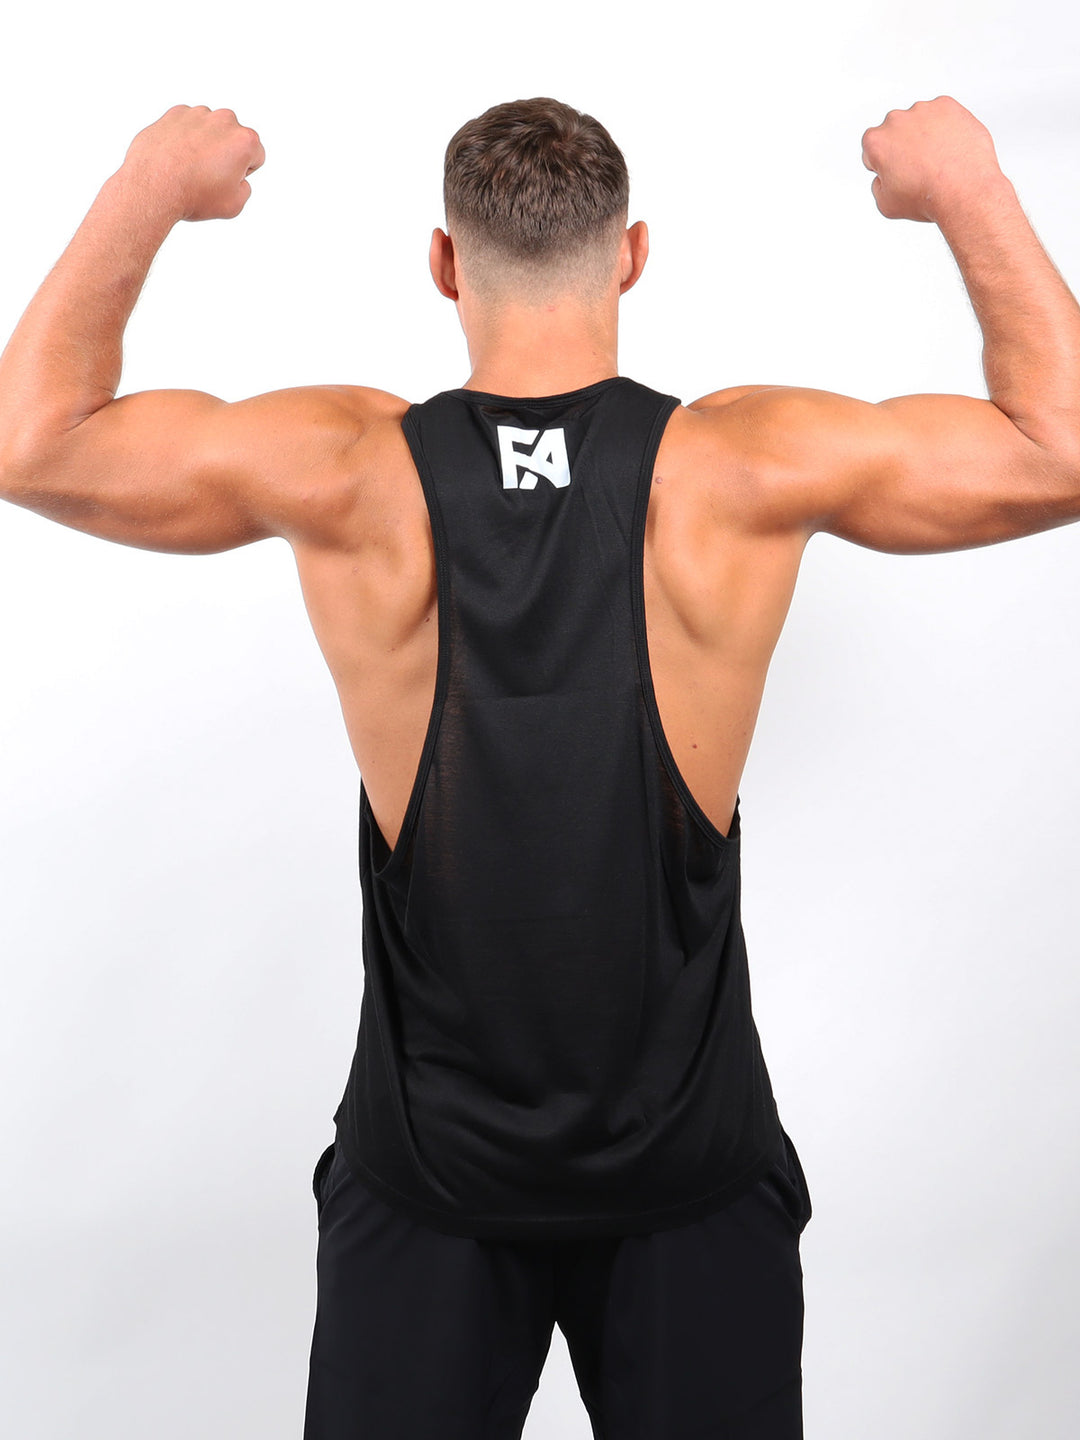 FA - Swiss Edition Tell - Muscle Shirt - Unisex